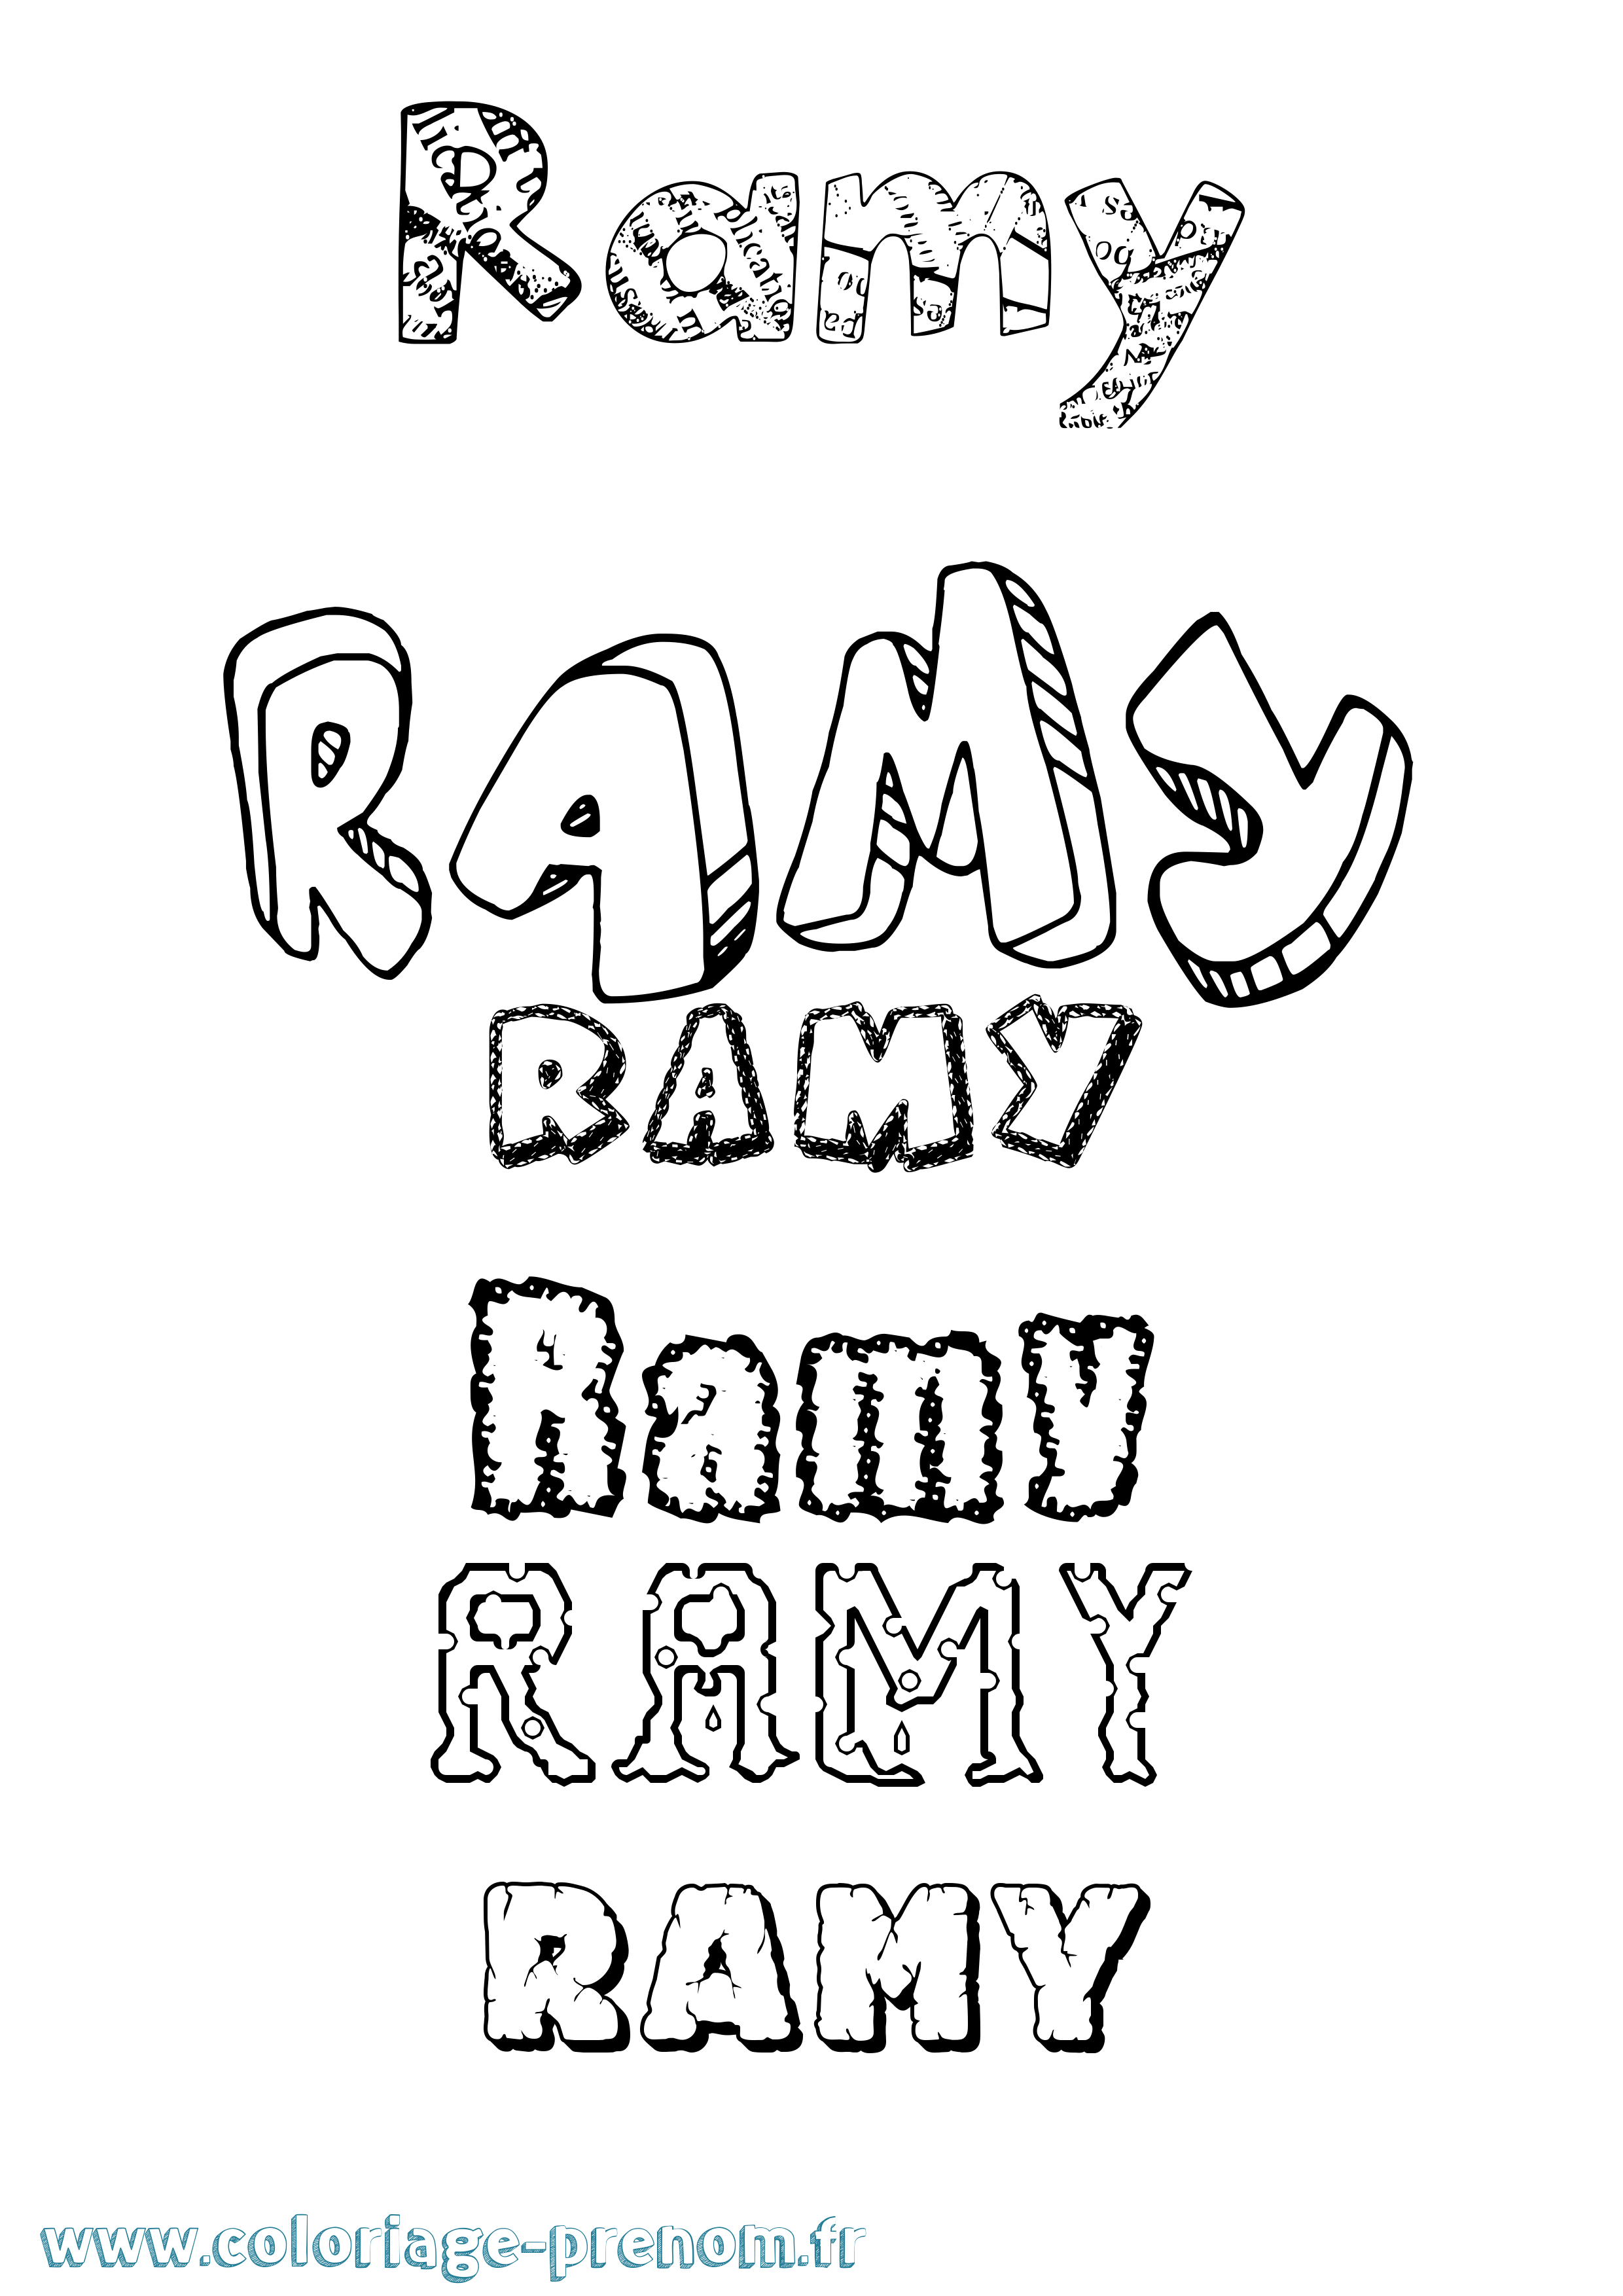 Coloriage prénom Ramy